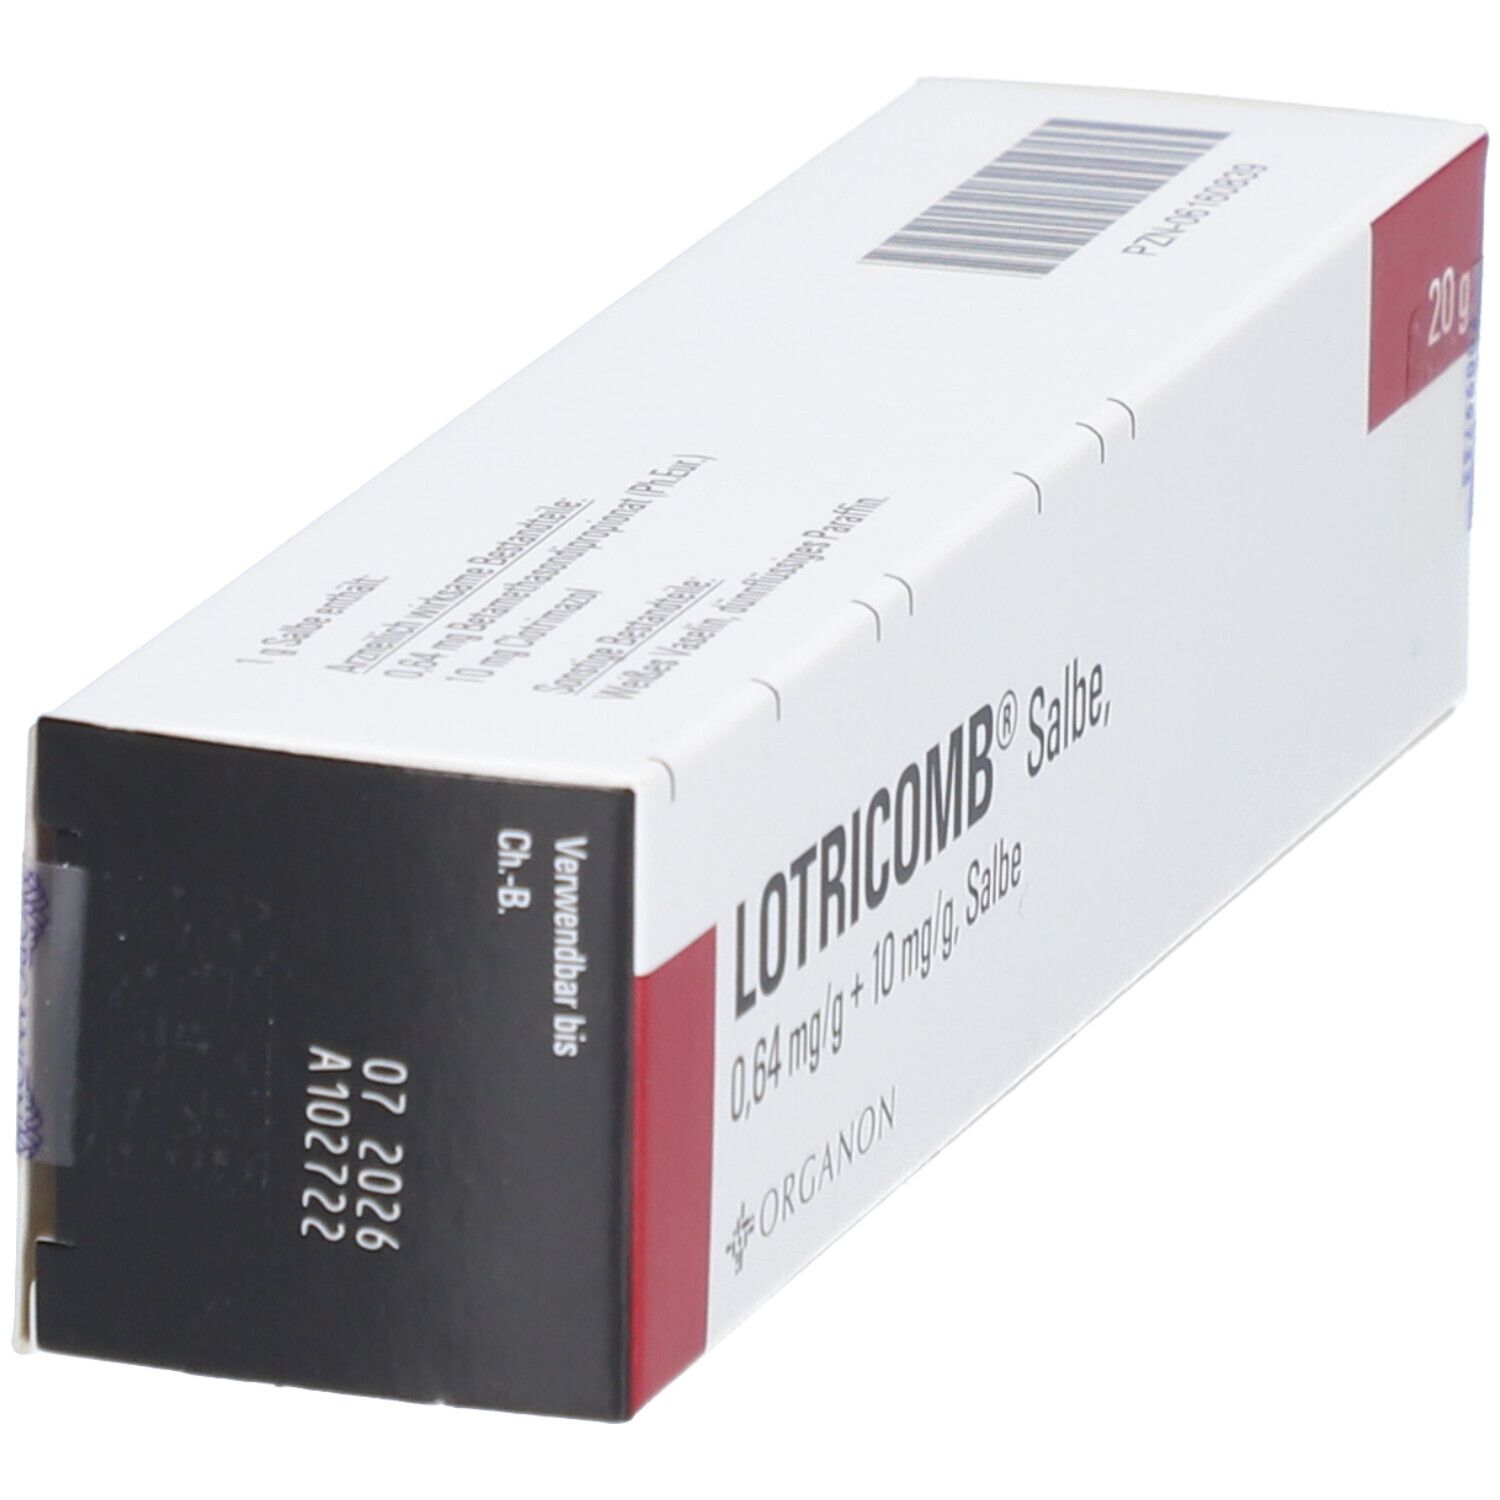 LOTRICOMB® Salbe 0,64 mg/g + 10 mg/g